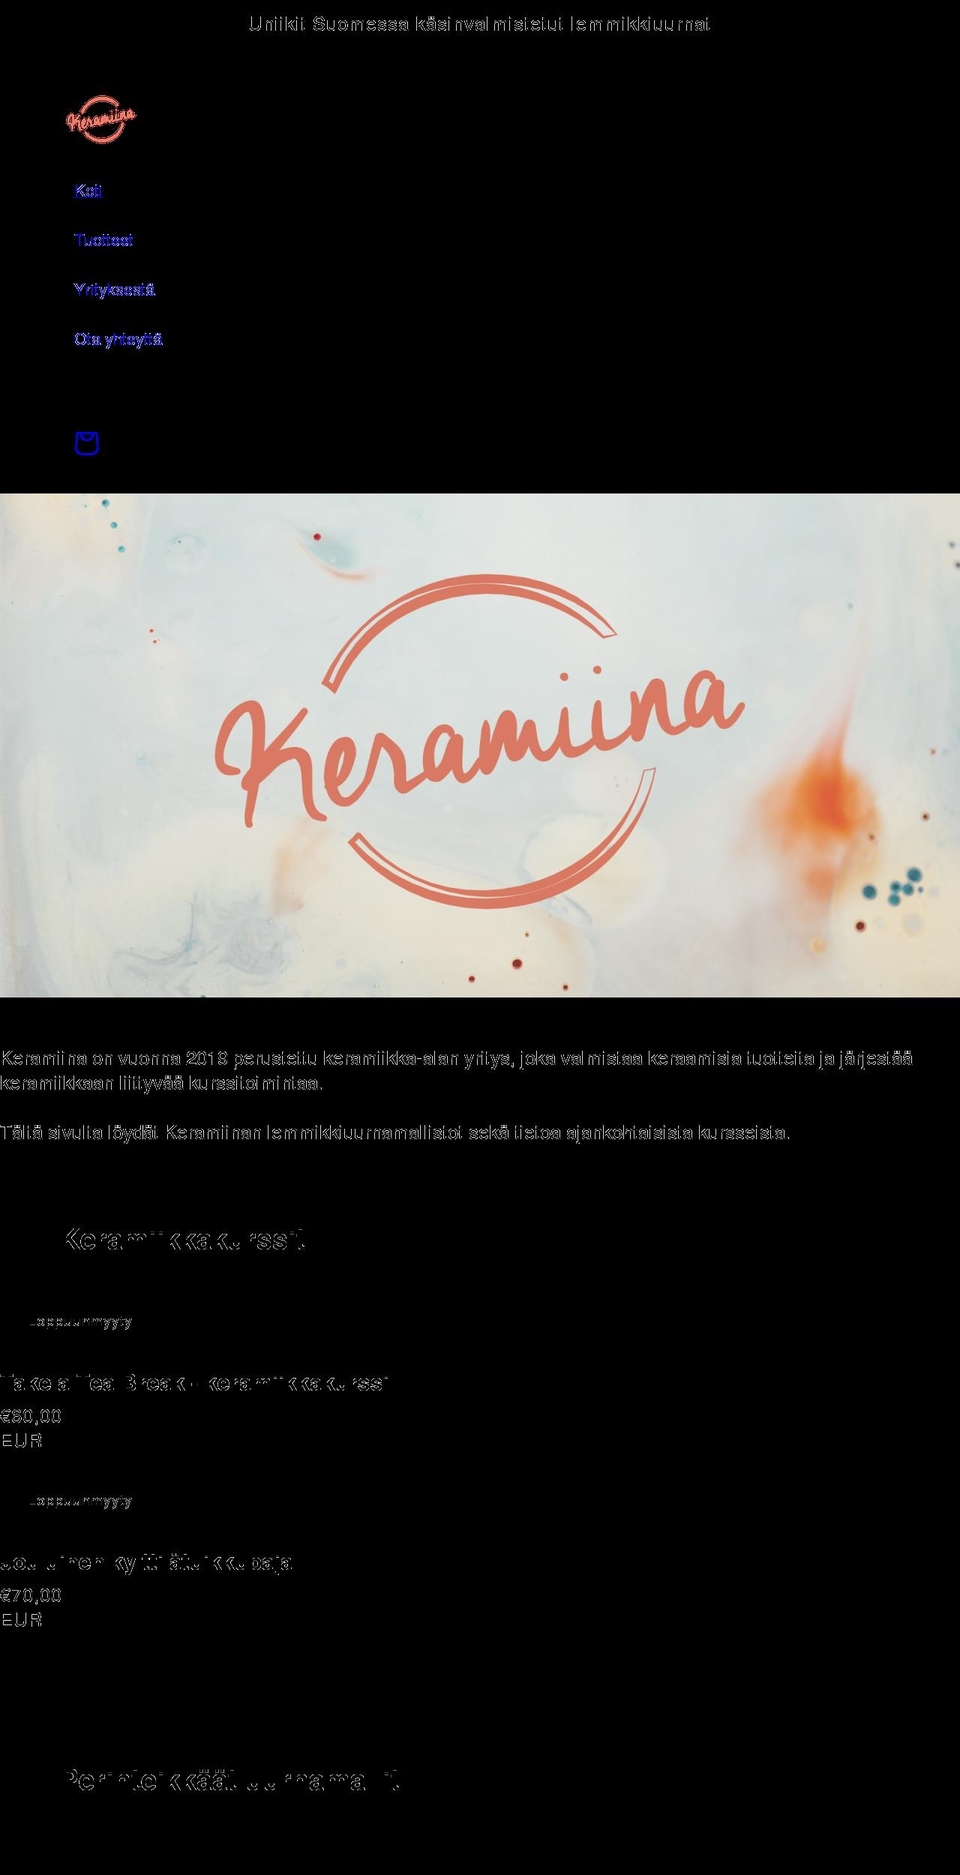 keramiina.fi shopify website screenshot